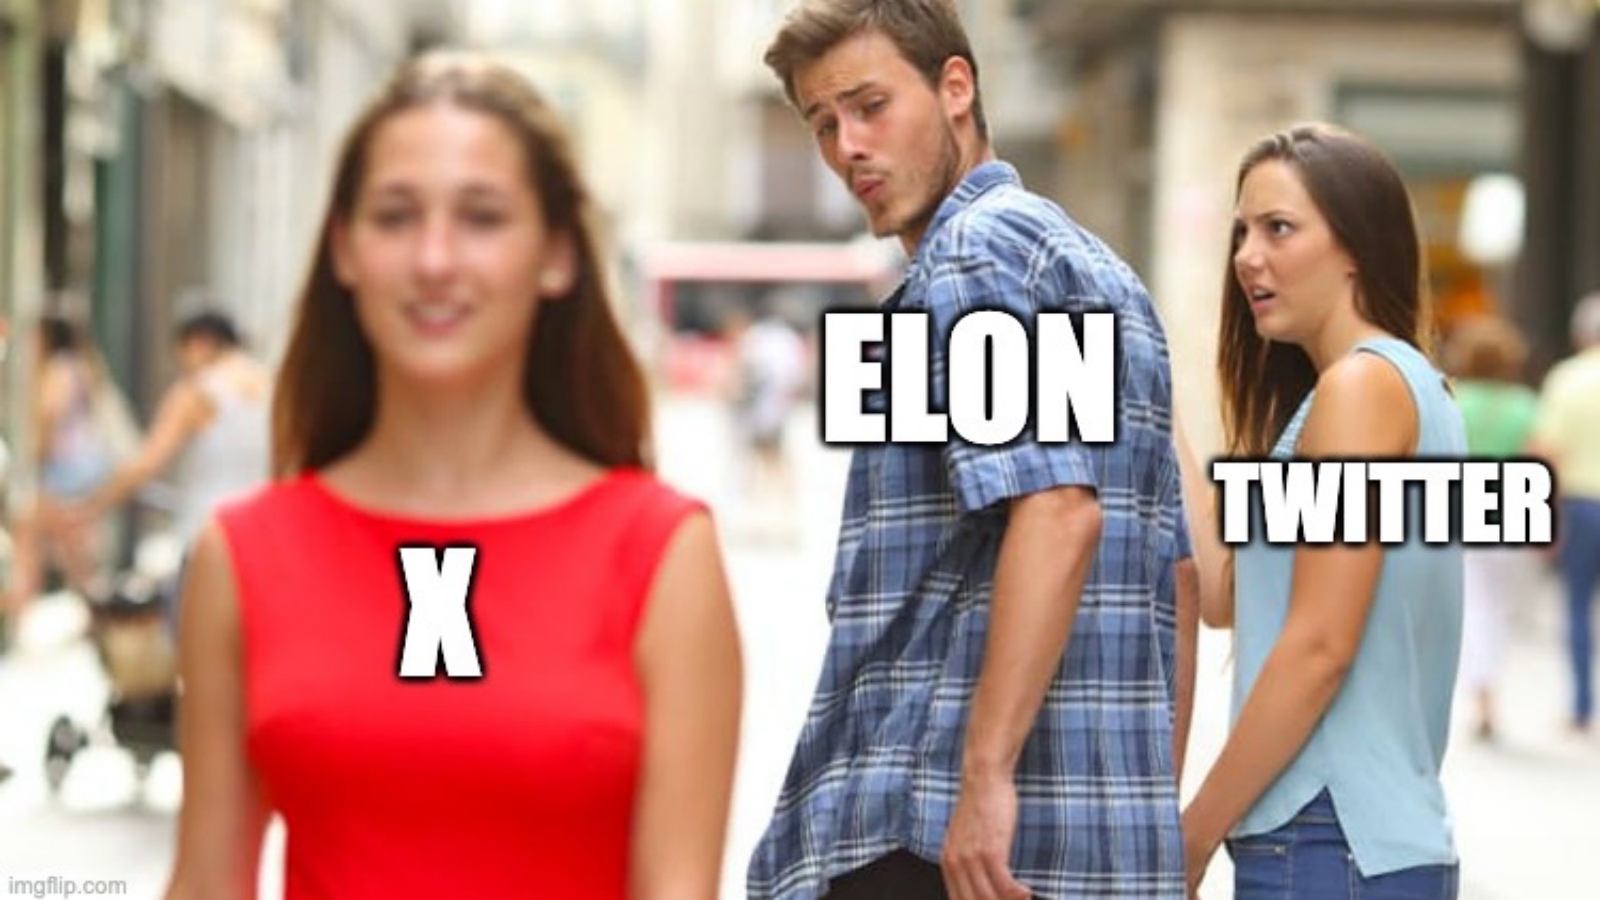 meme showing Elon Musk changing Twitter to X